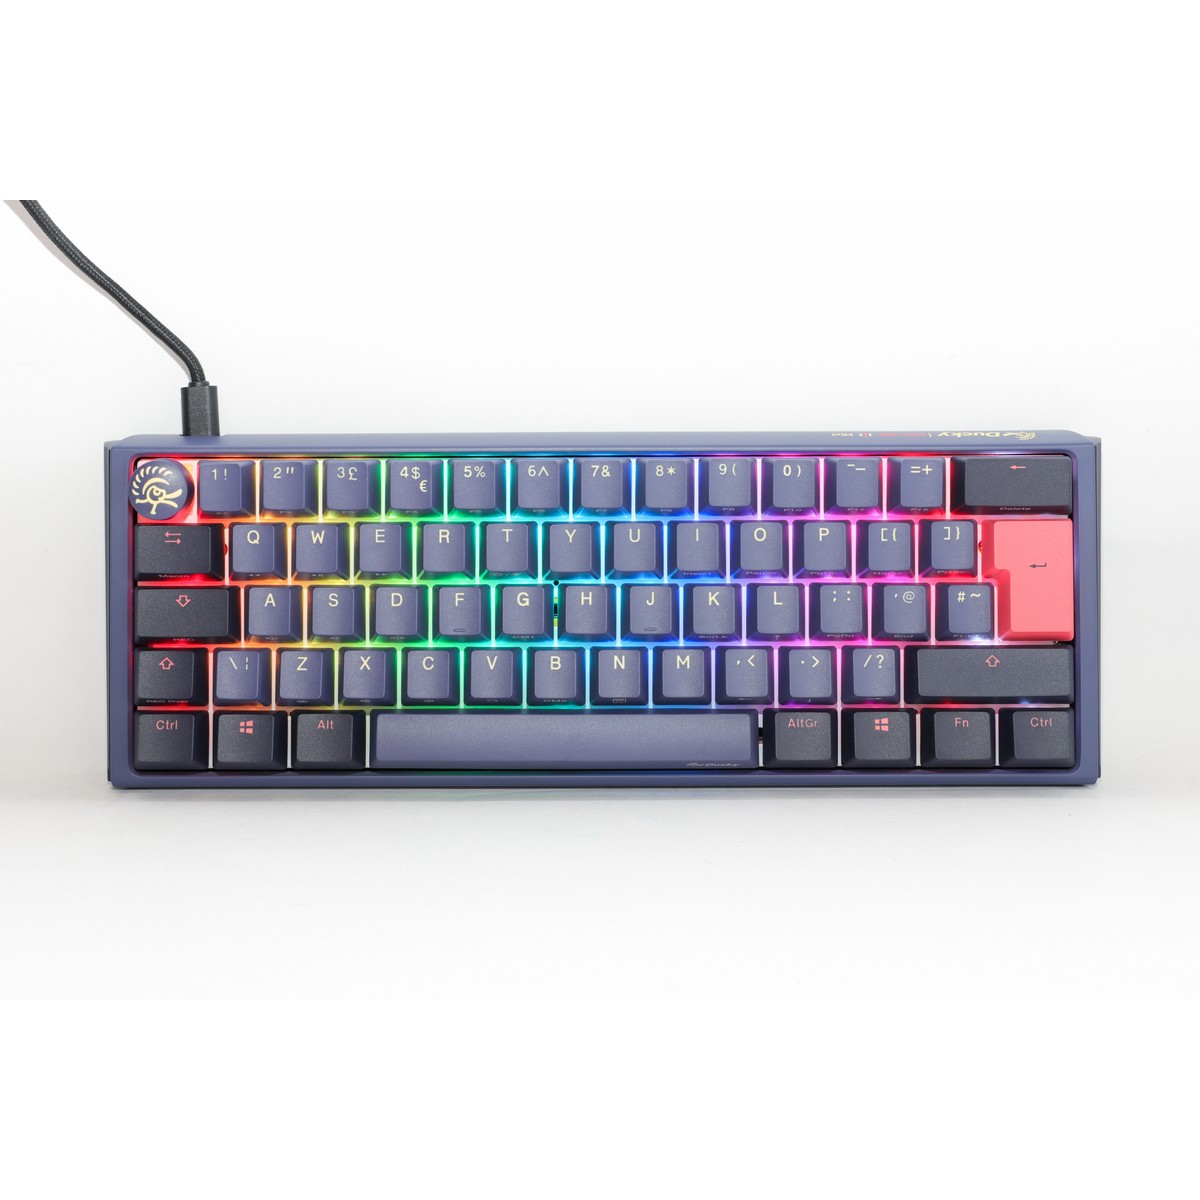 Ducky One 3 Cosmic Mini 60% USB RGB Mechanical Gaming Keyboard Cherry MX Brown Switch - UK Layout